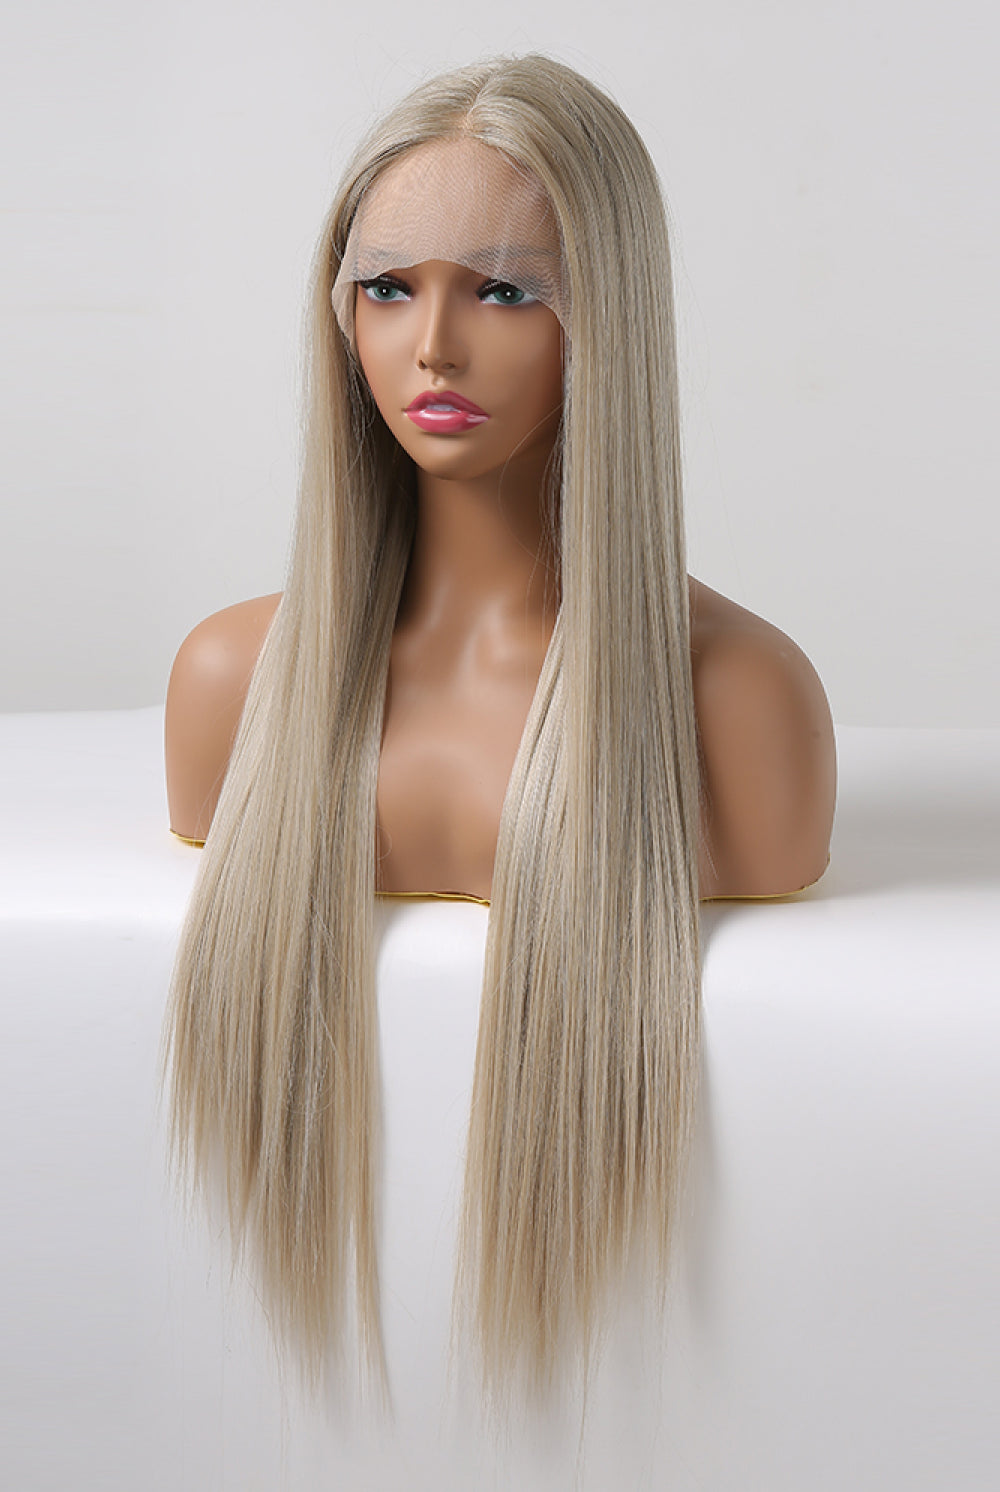 Gray Senorita 13*2" Lace Front Wigs Synthetic Long Straight 27" 150% Density- Ash Blonde Wigs